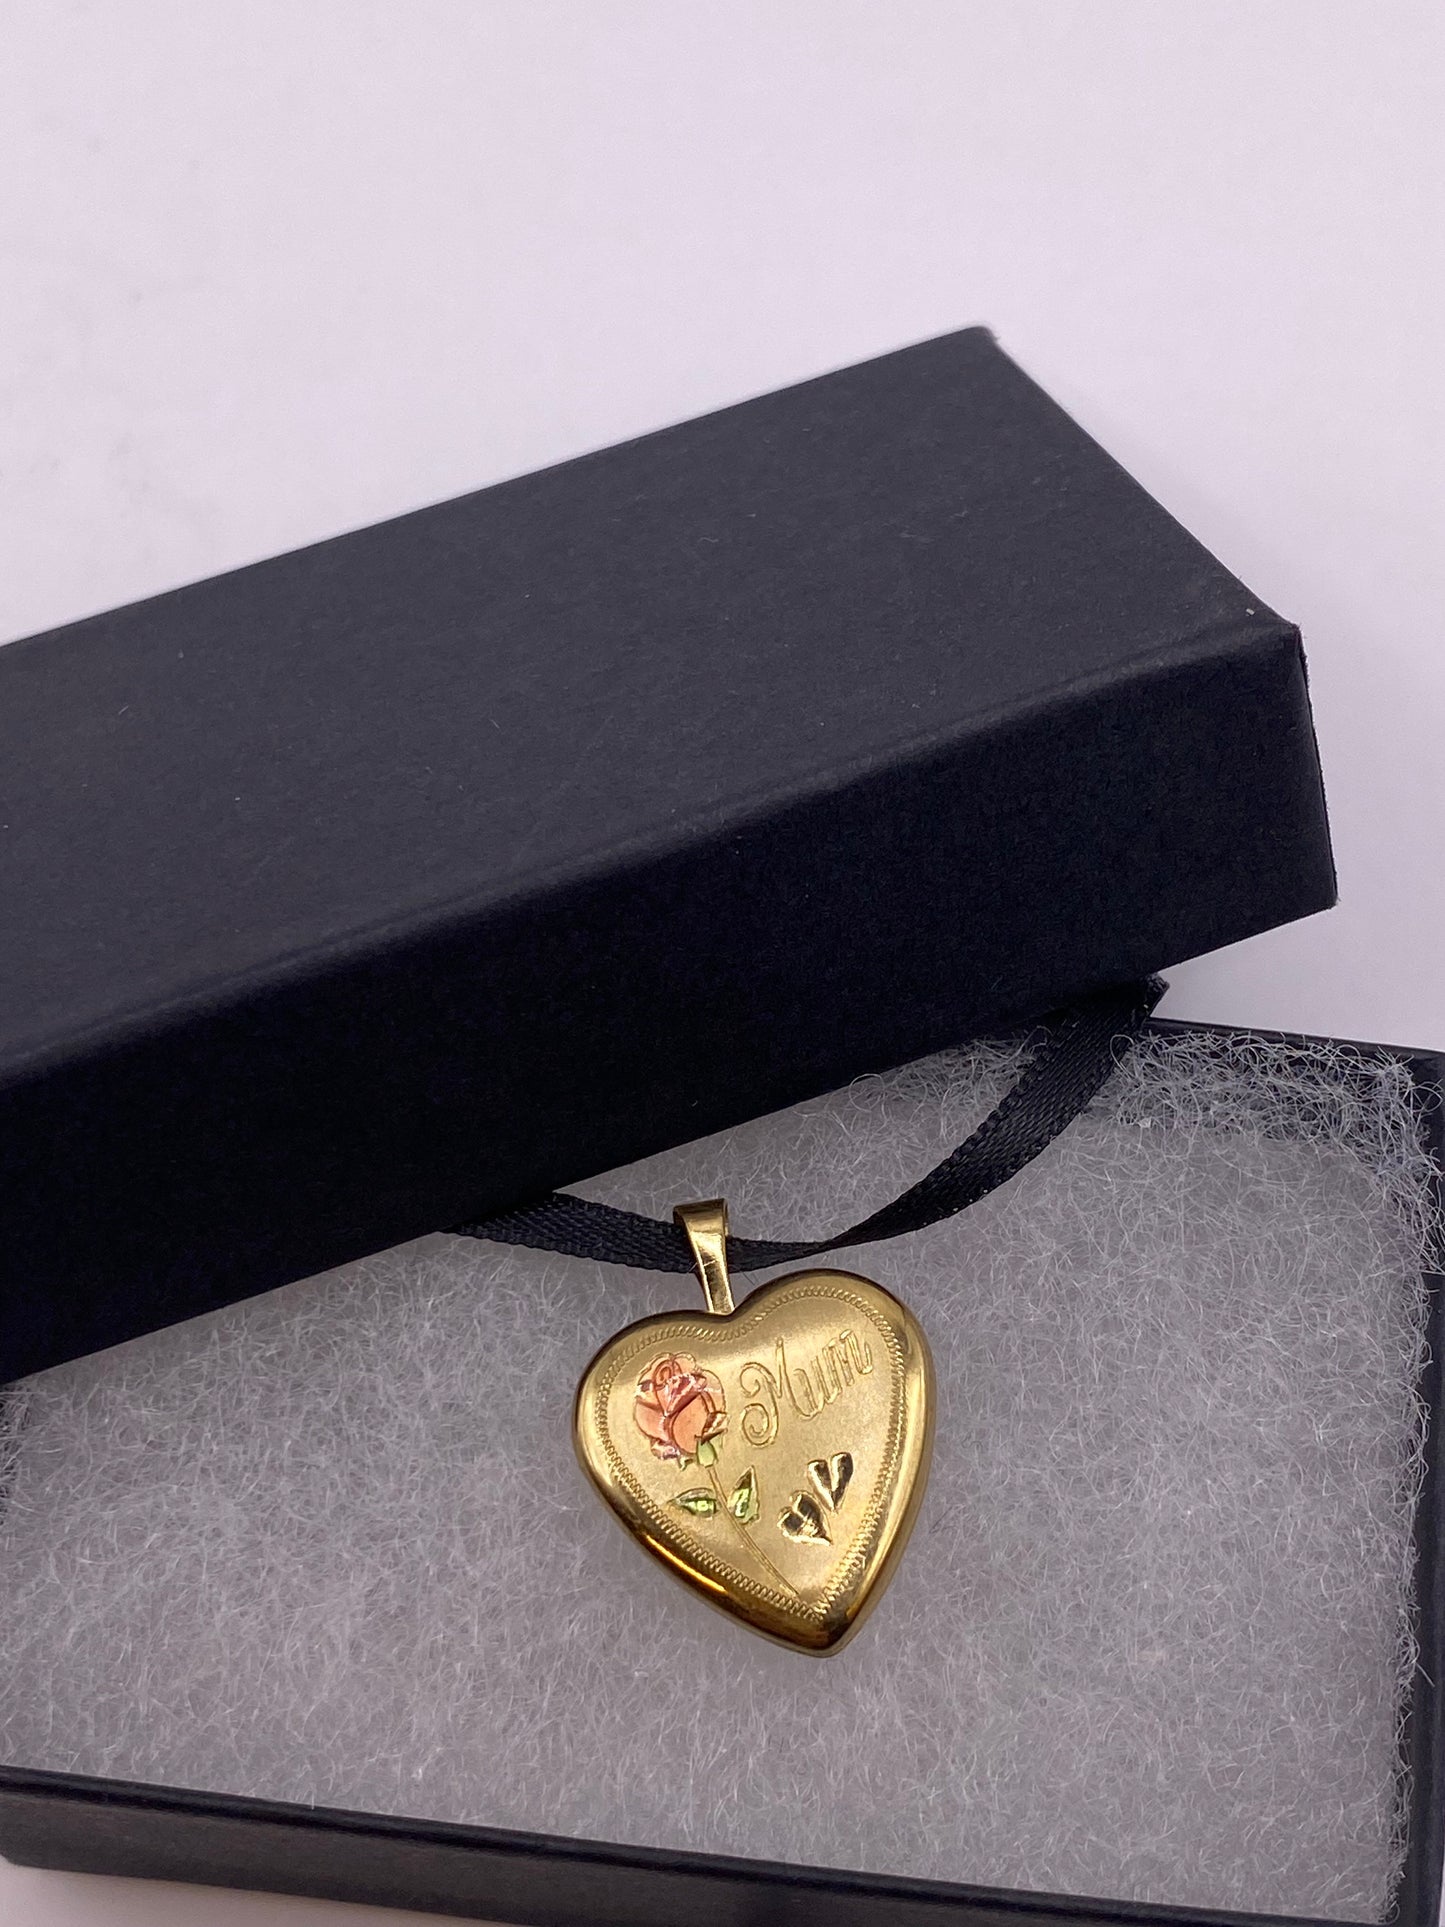 Vintage Heart Mum Locket Choker Gold Filled Necklace